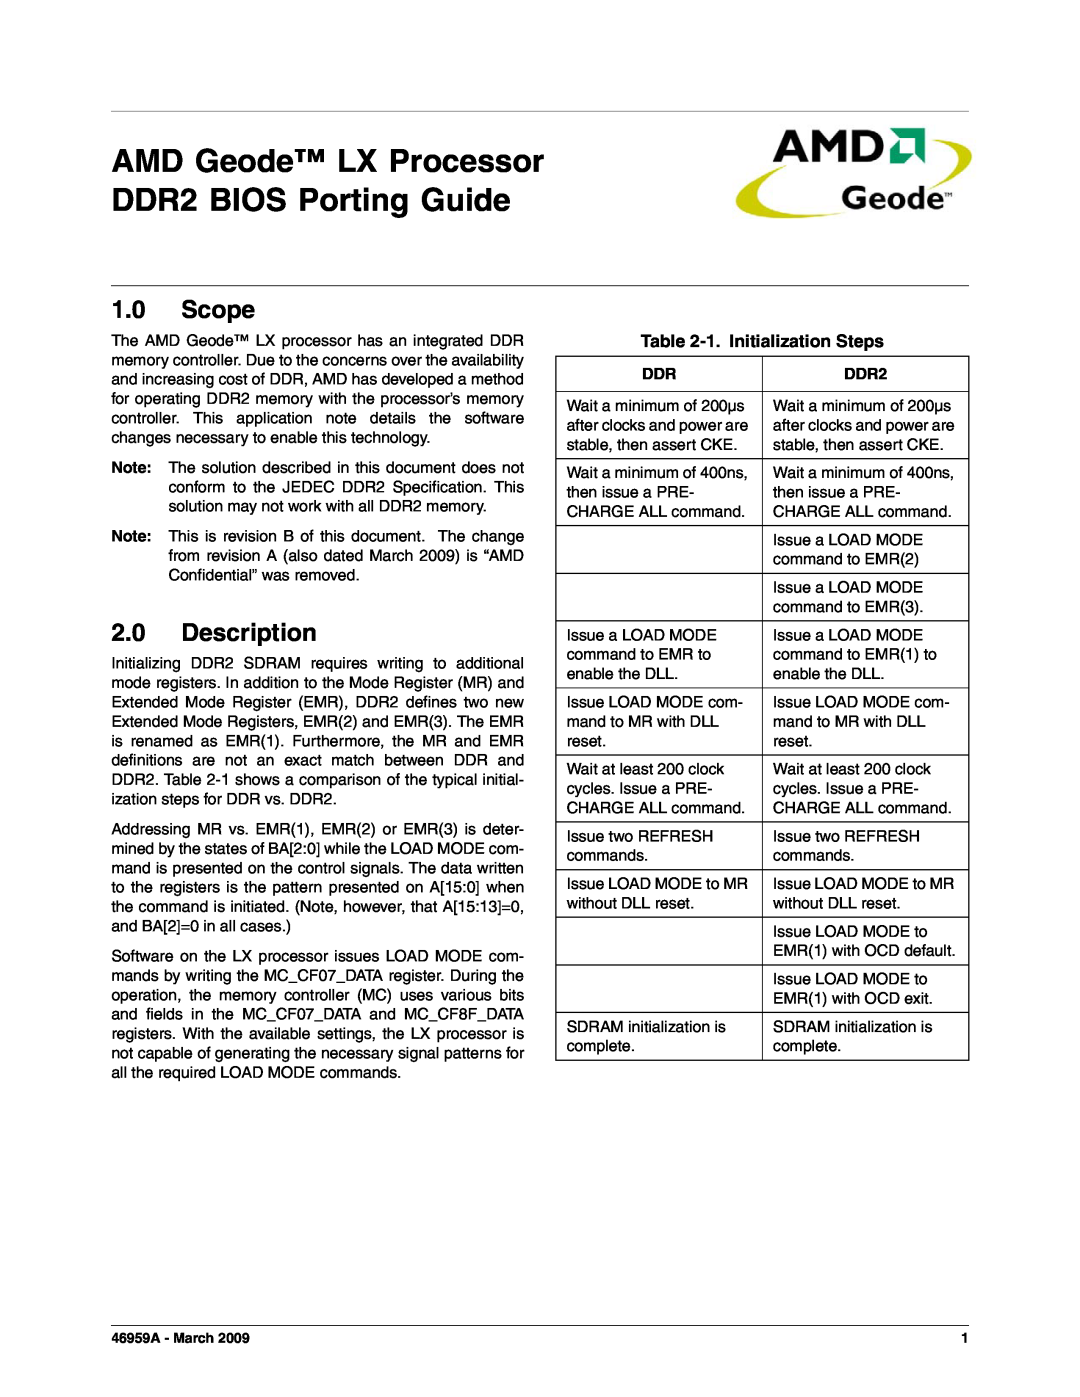 AMD CS5536 manual Scope, Description, 1. Initialization Steps, AMD Geode LX Processor DDR2 BIOS Porting Guide 